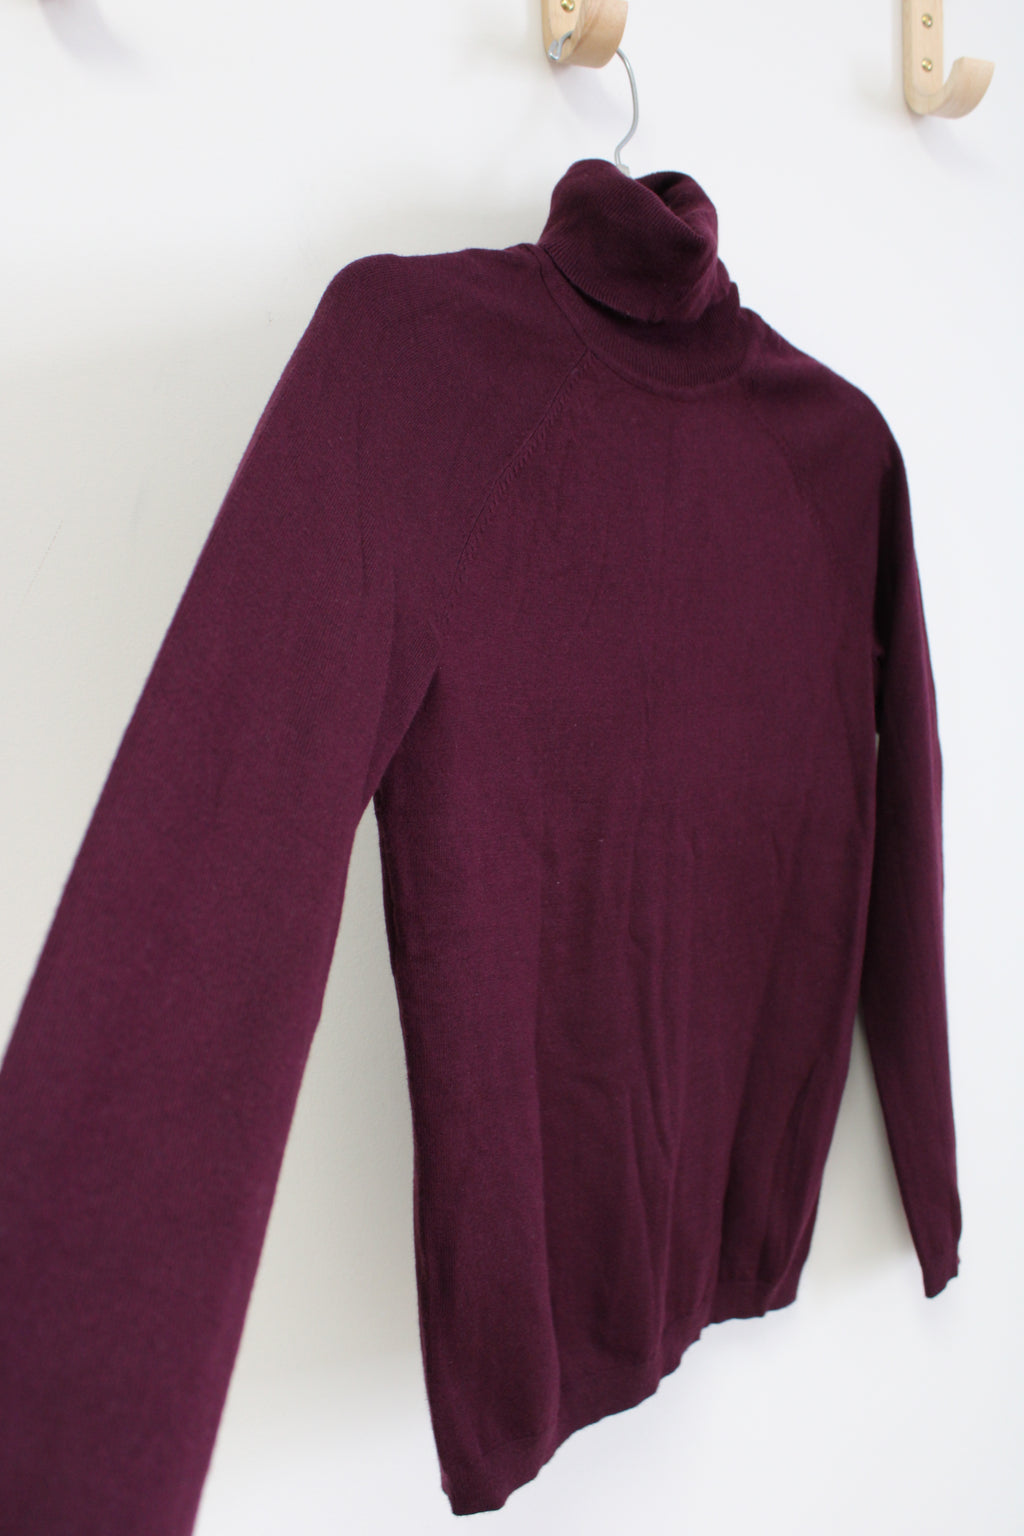 Talbots Purple Turtleneck Sweater | S